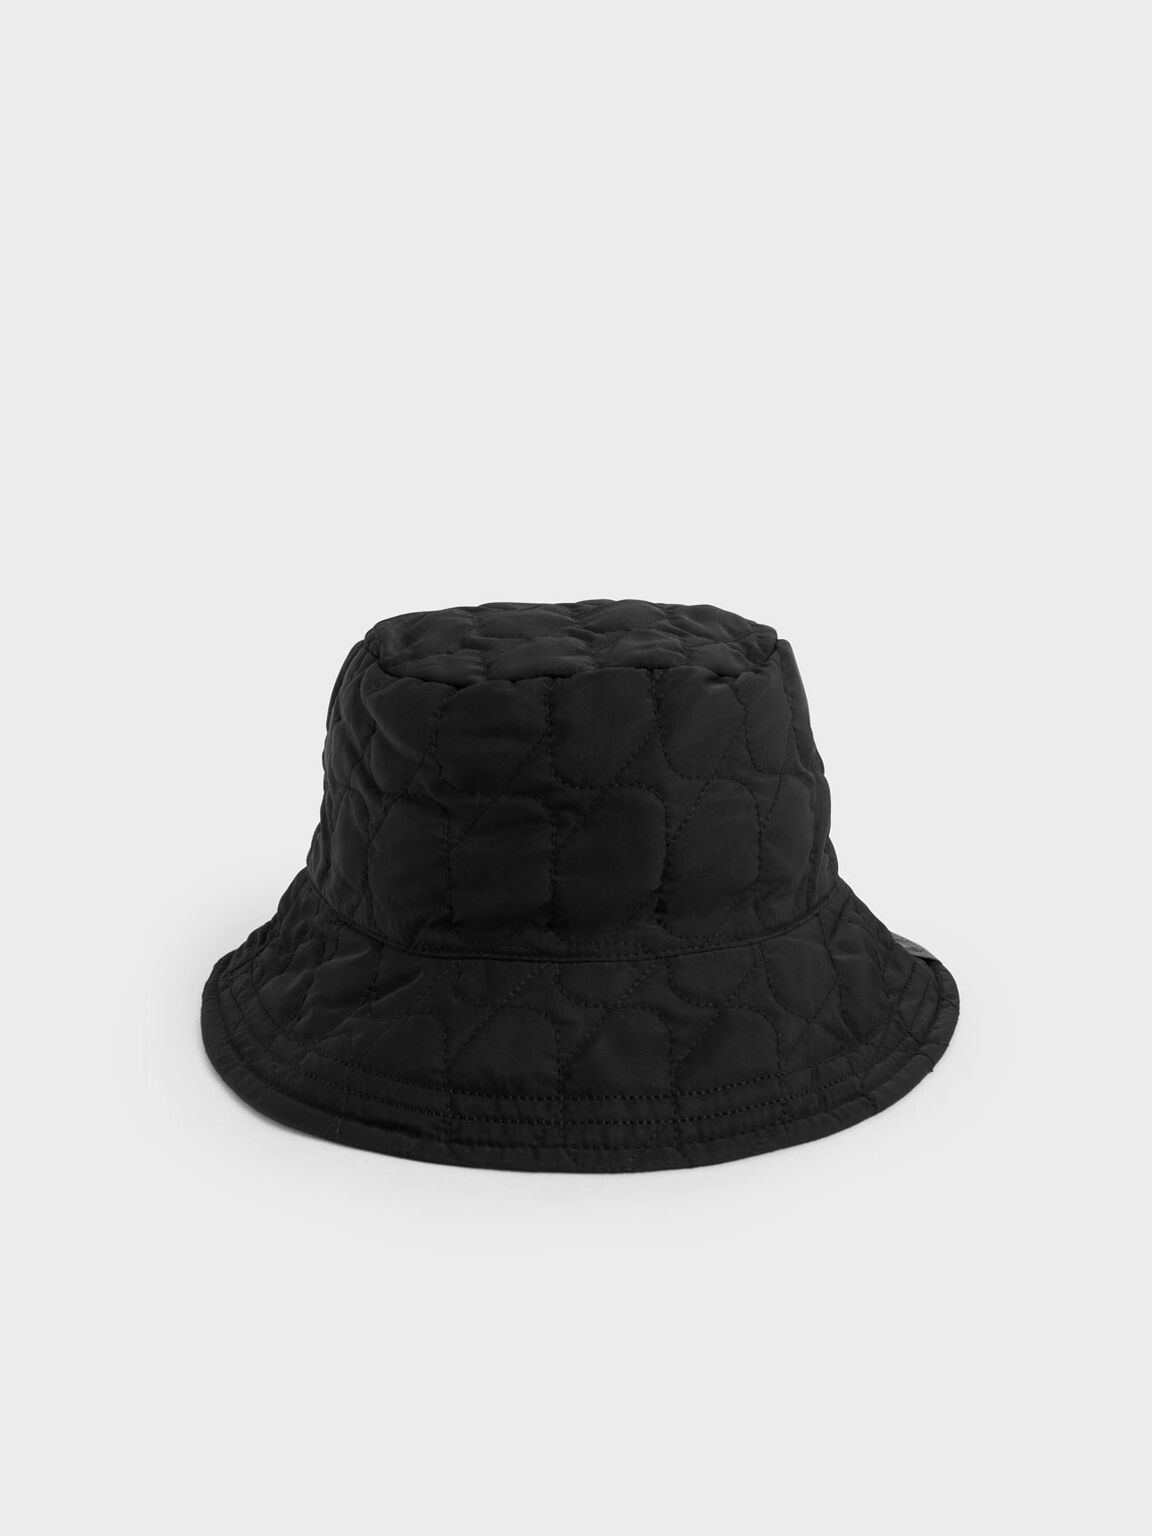 Nylon Textured Bucket Hat, Black, hi-res